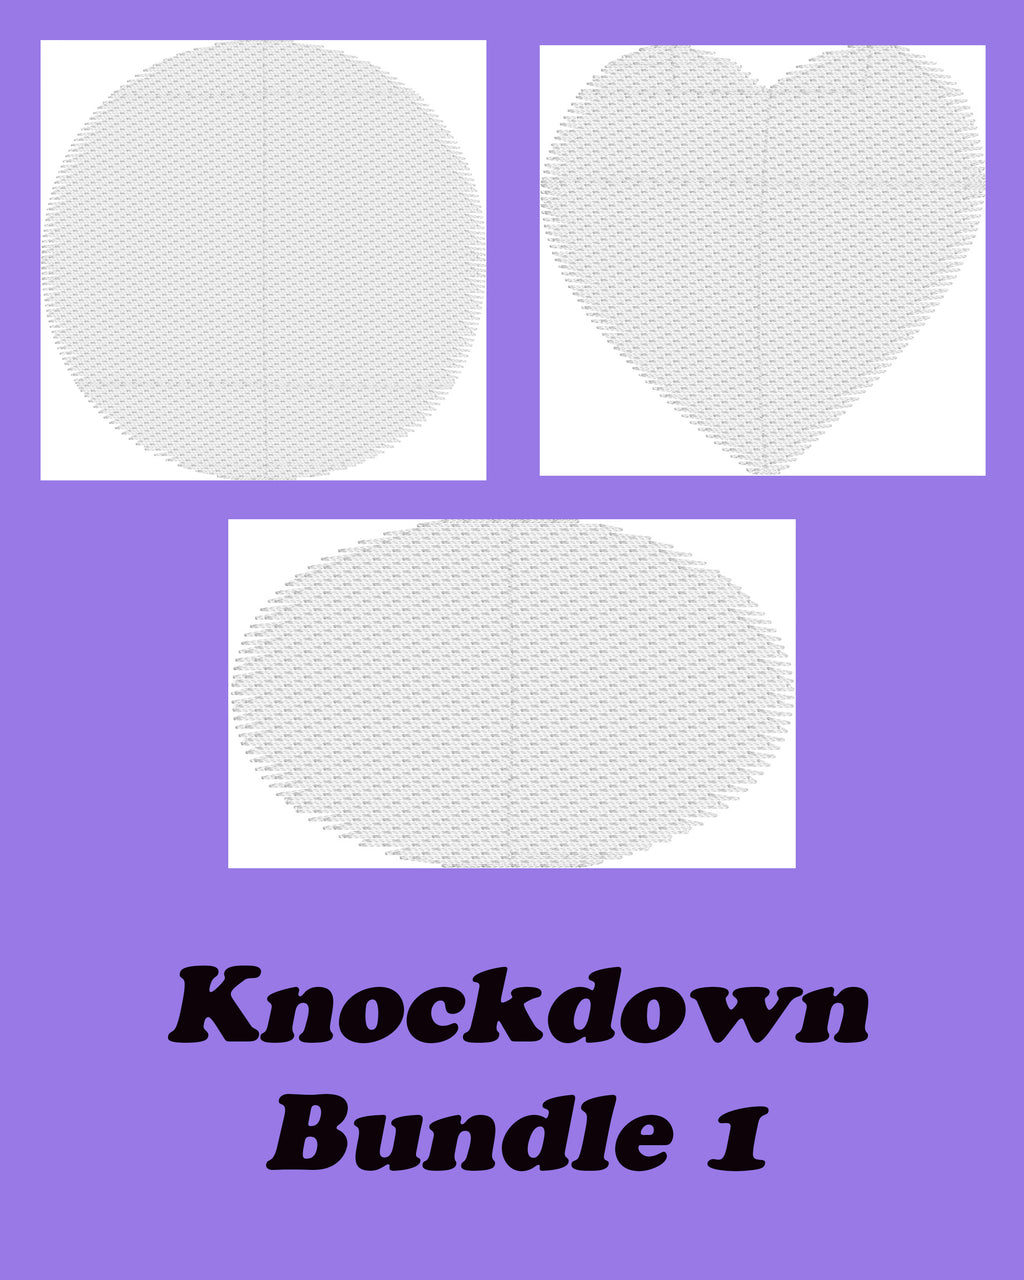 KnockDown Bundle HL5761 embroidery file